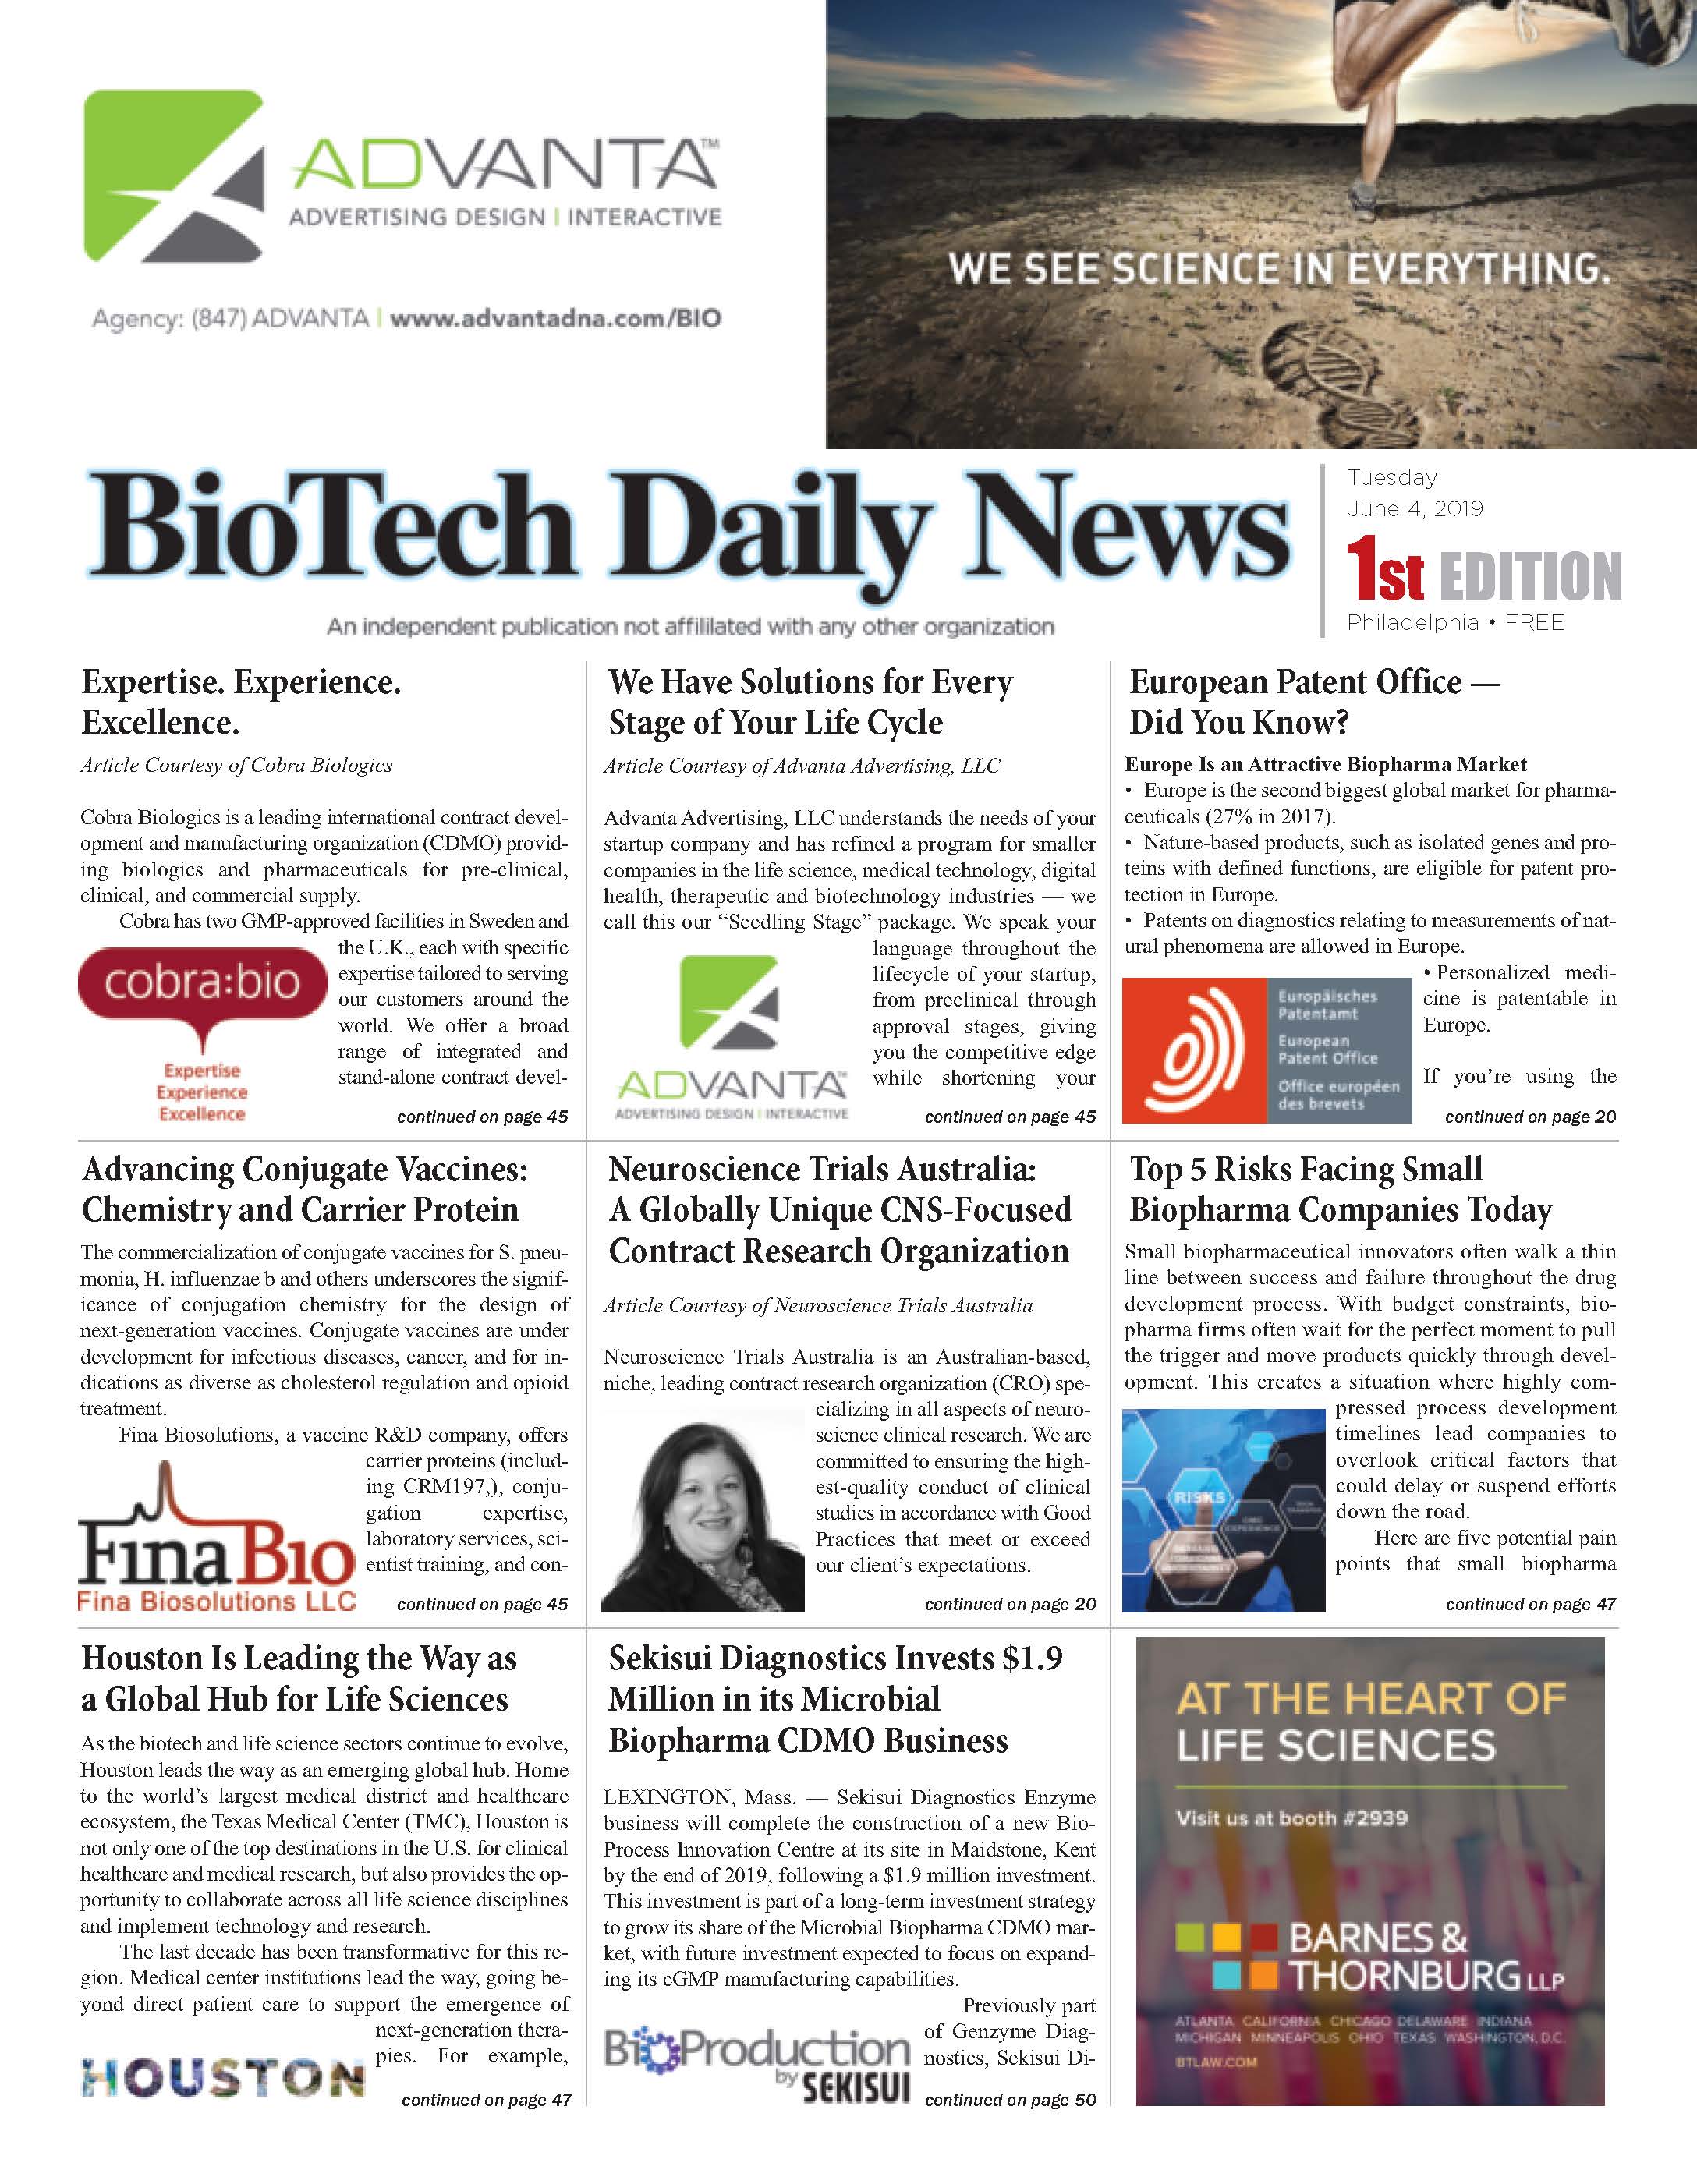 BioTech Daily news